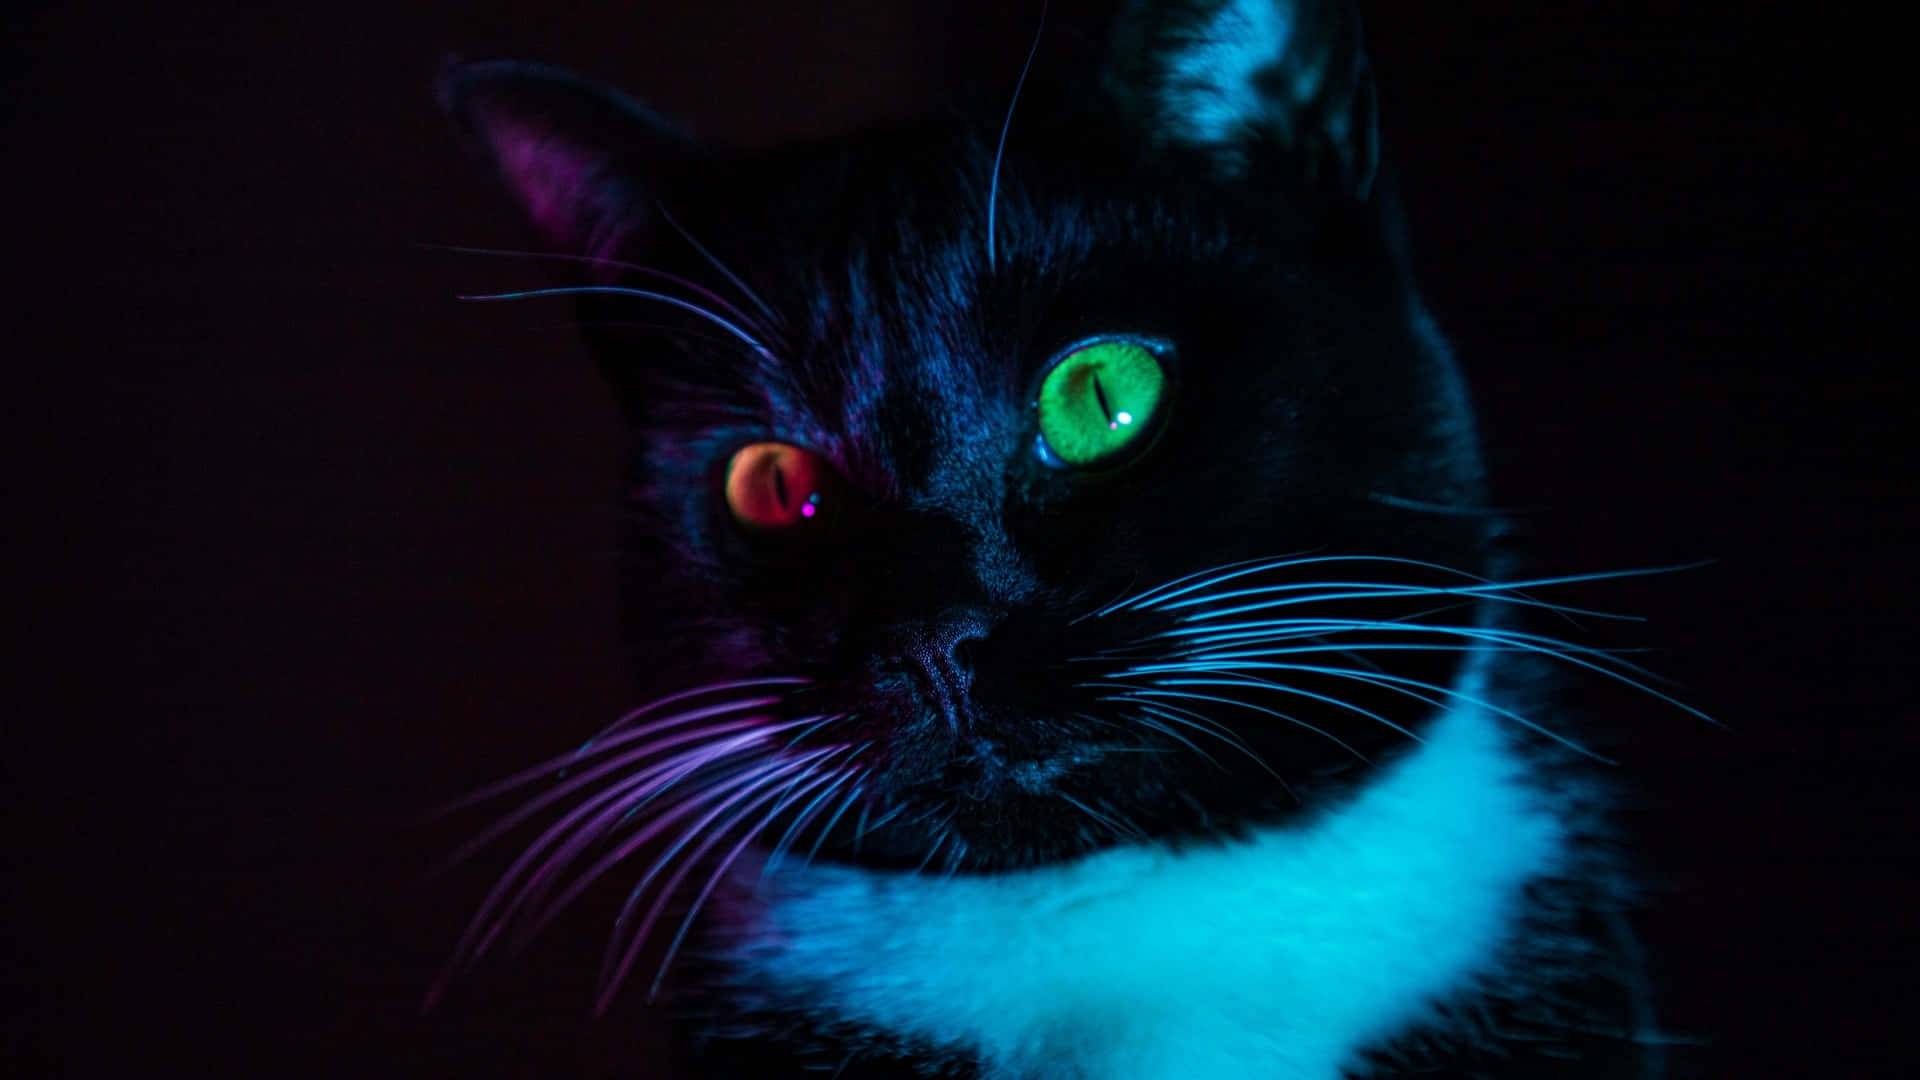 Red & Green Tuxedo Cat Eyes